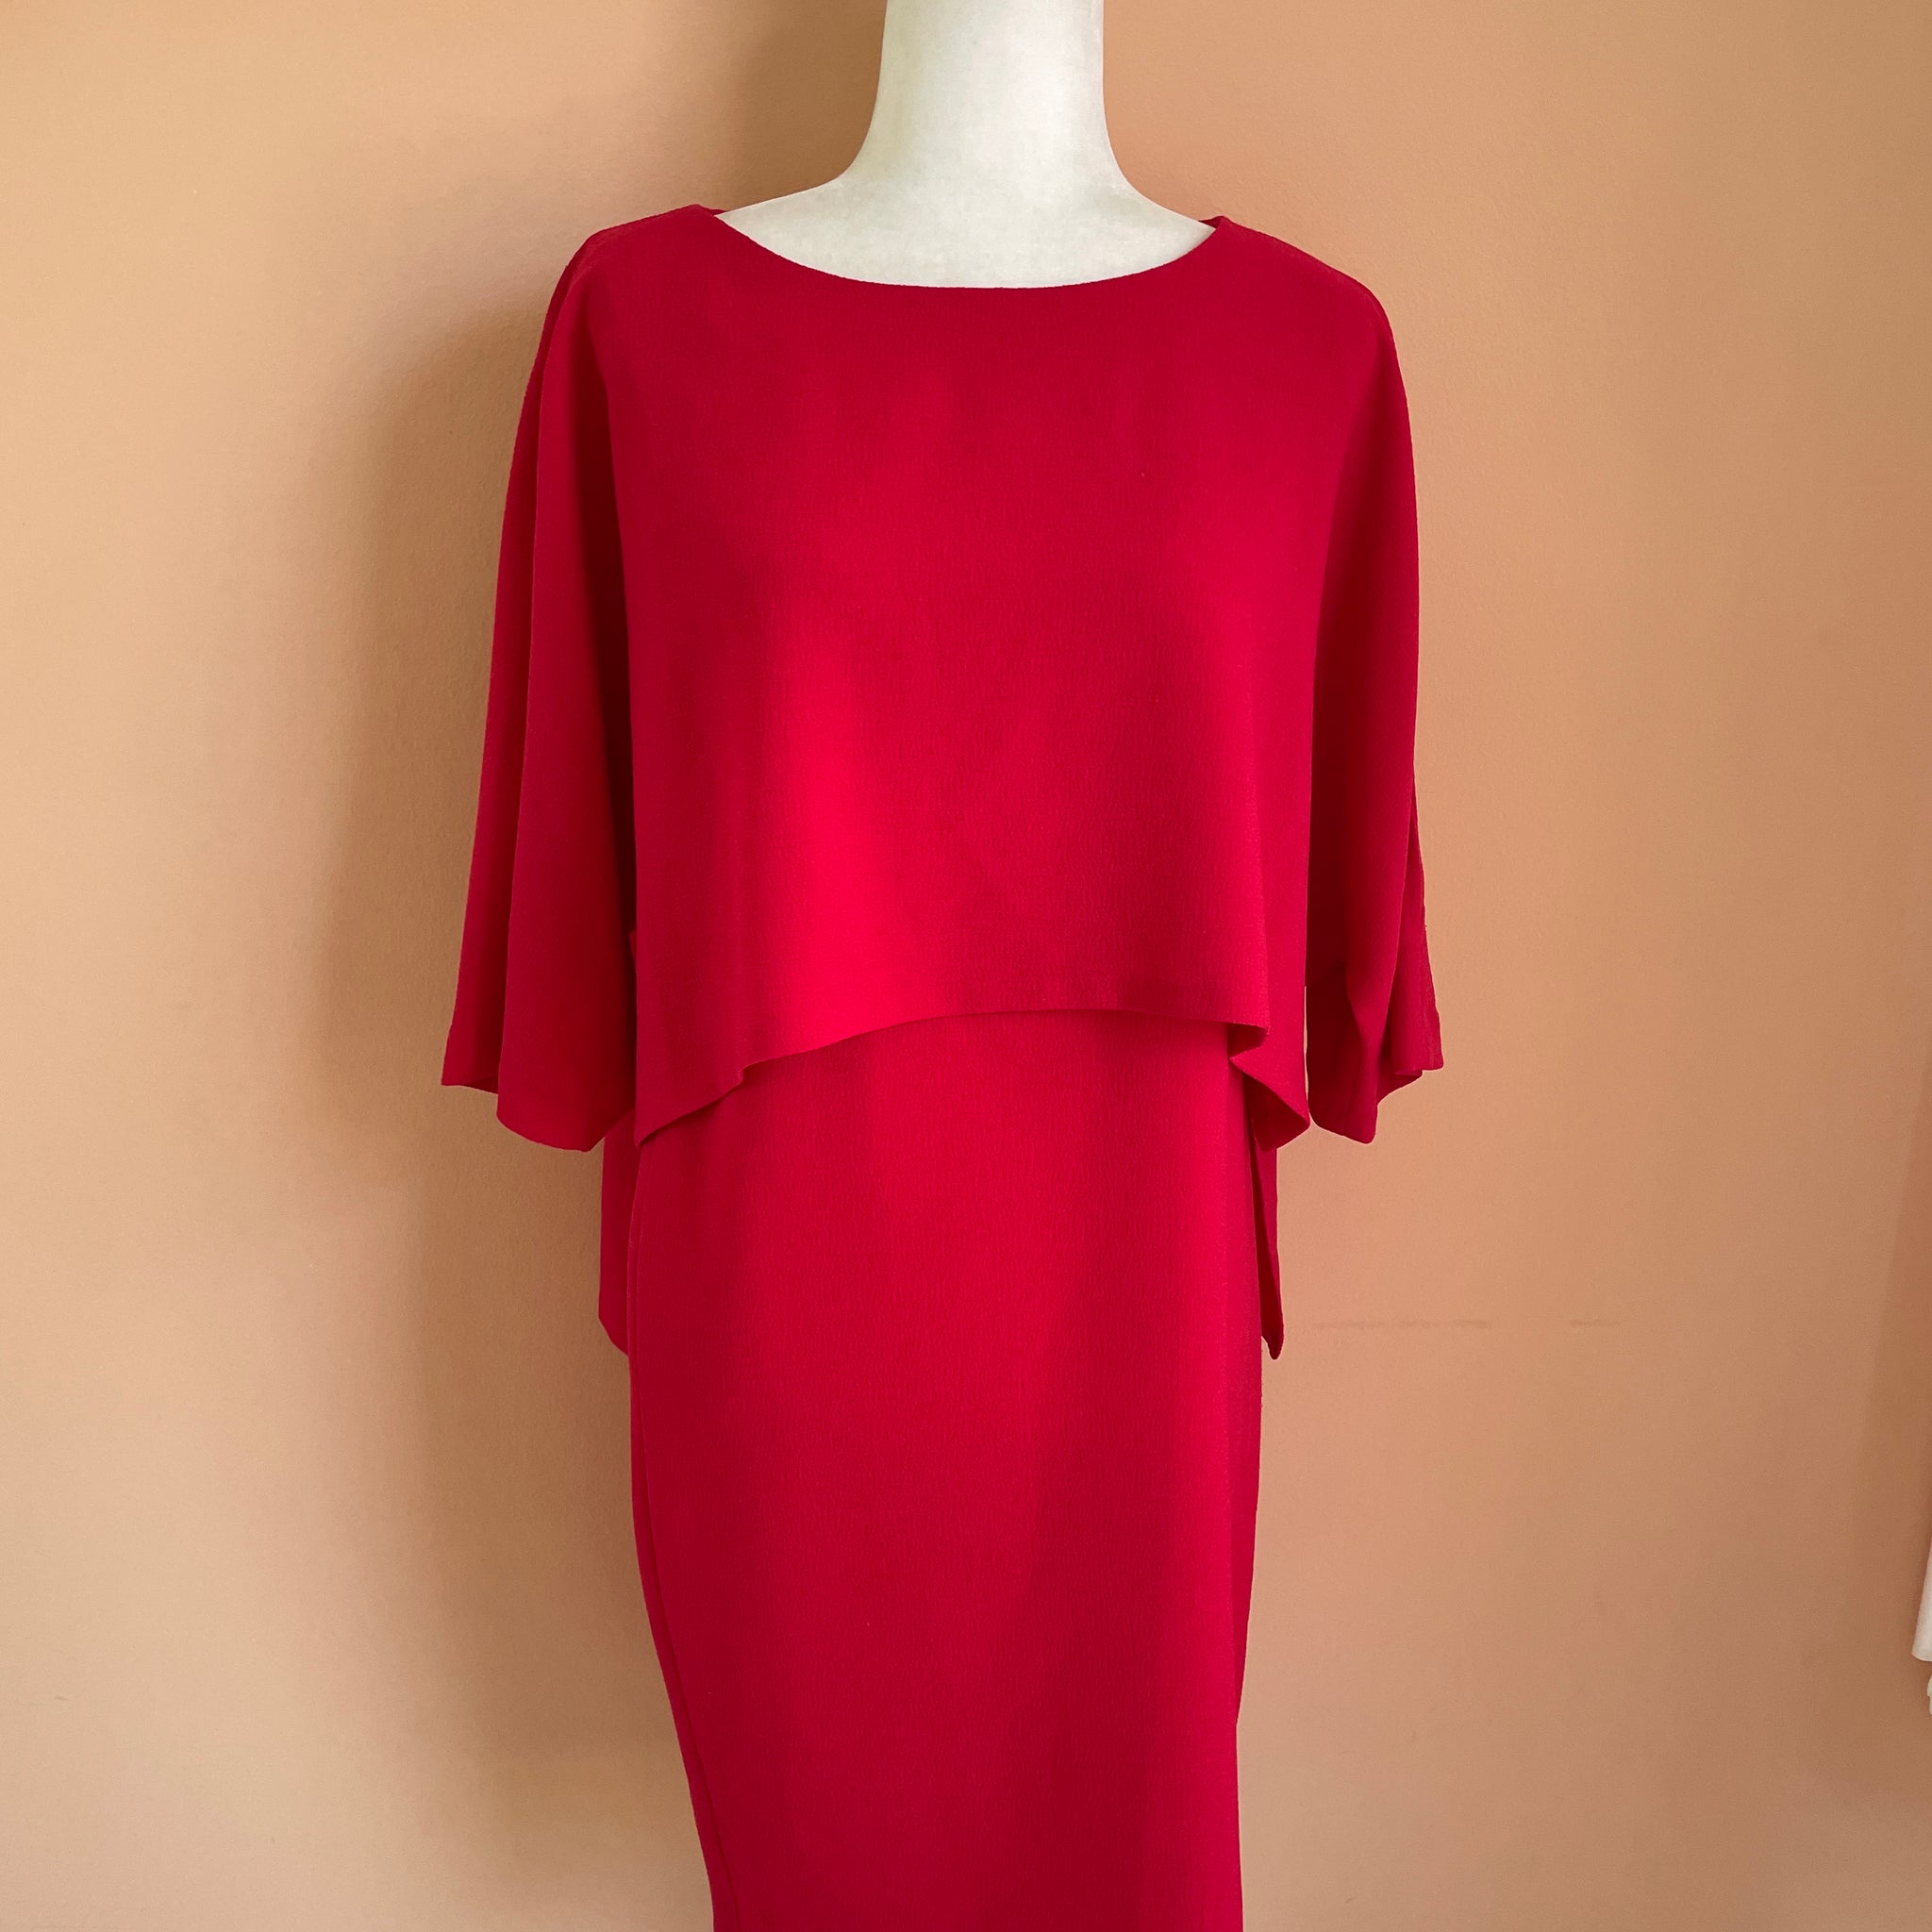 2000's red dress